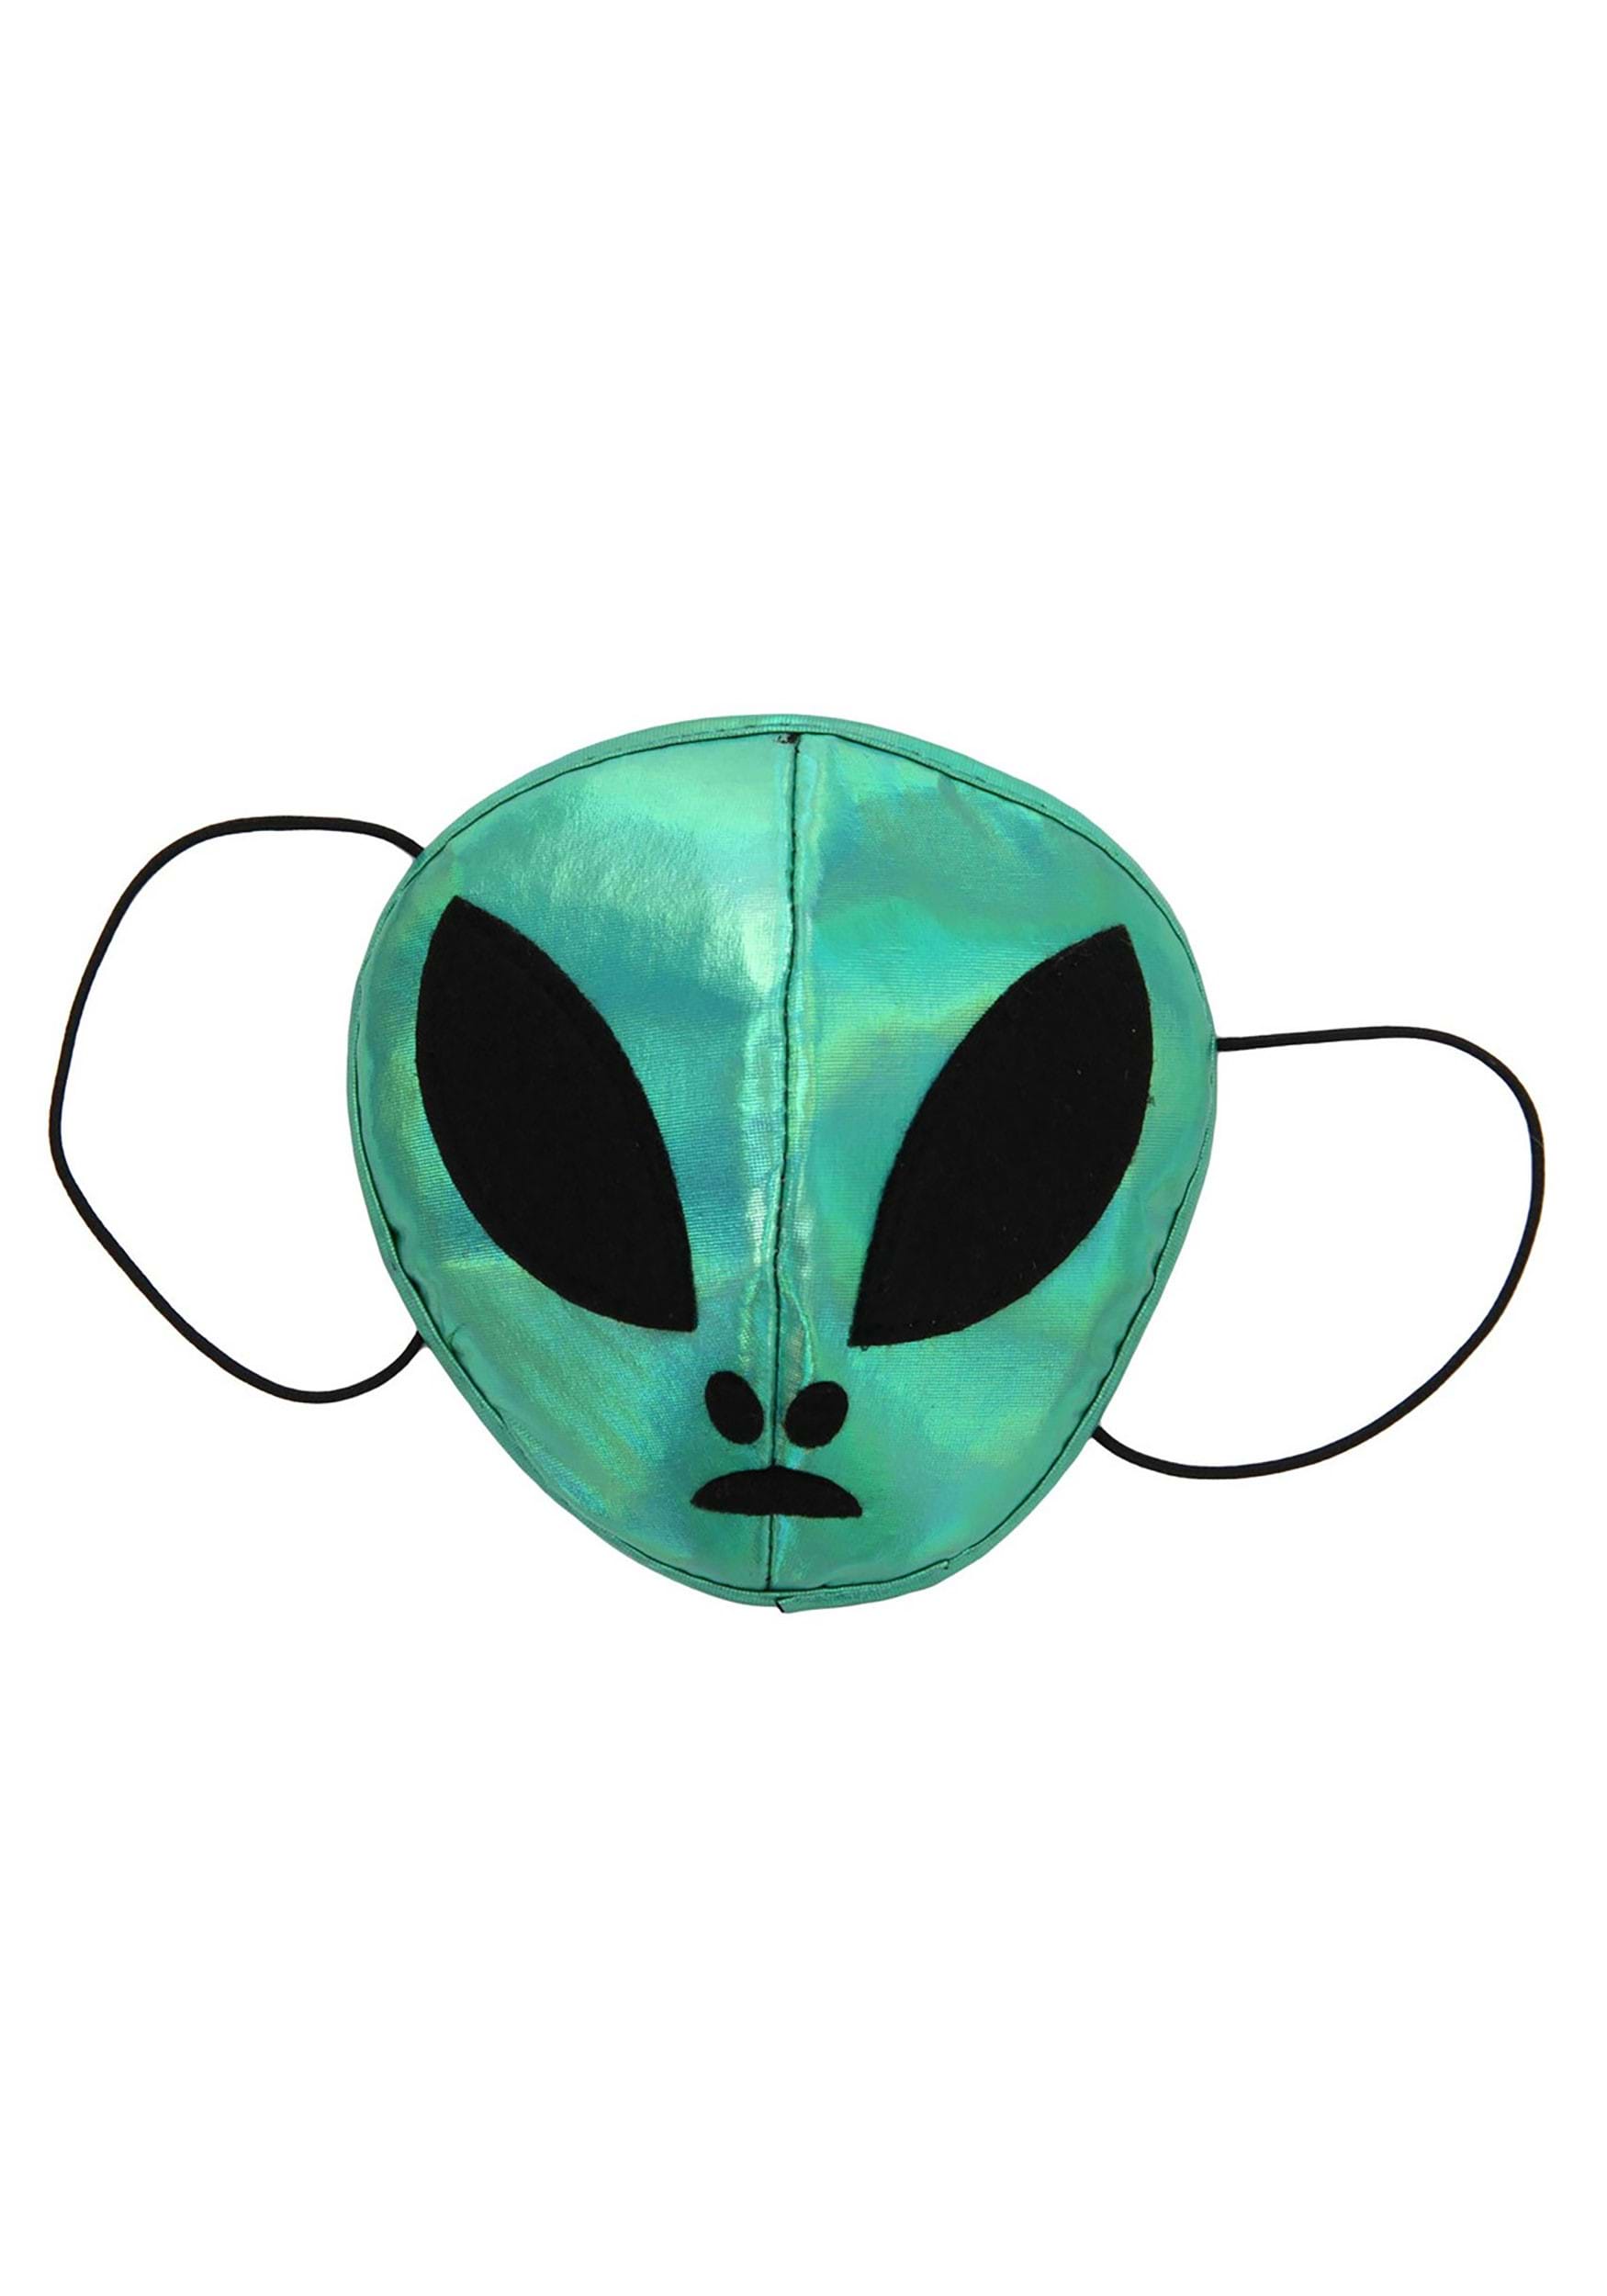 Alien Face Mask , Made By Us Masks